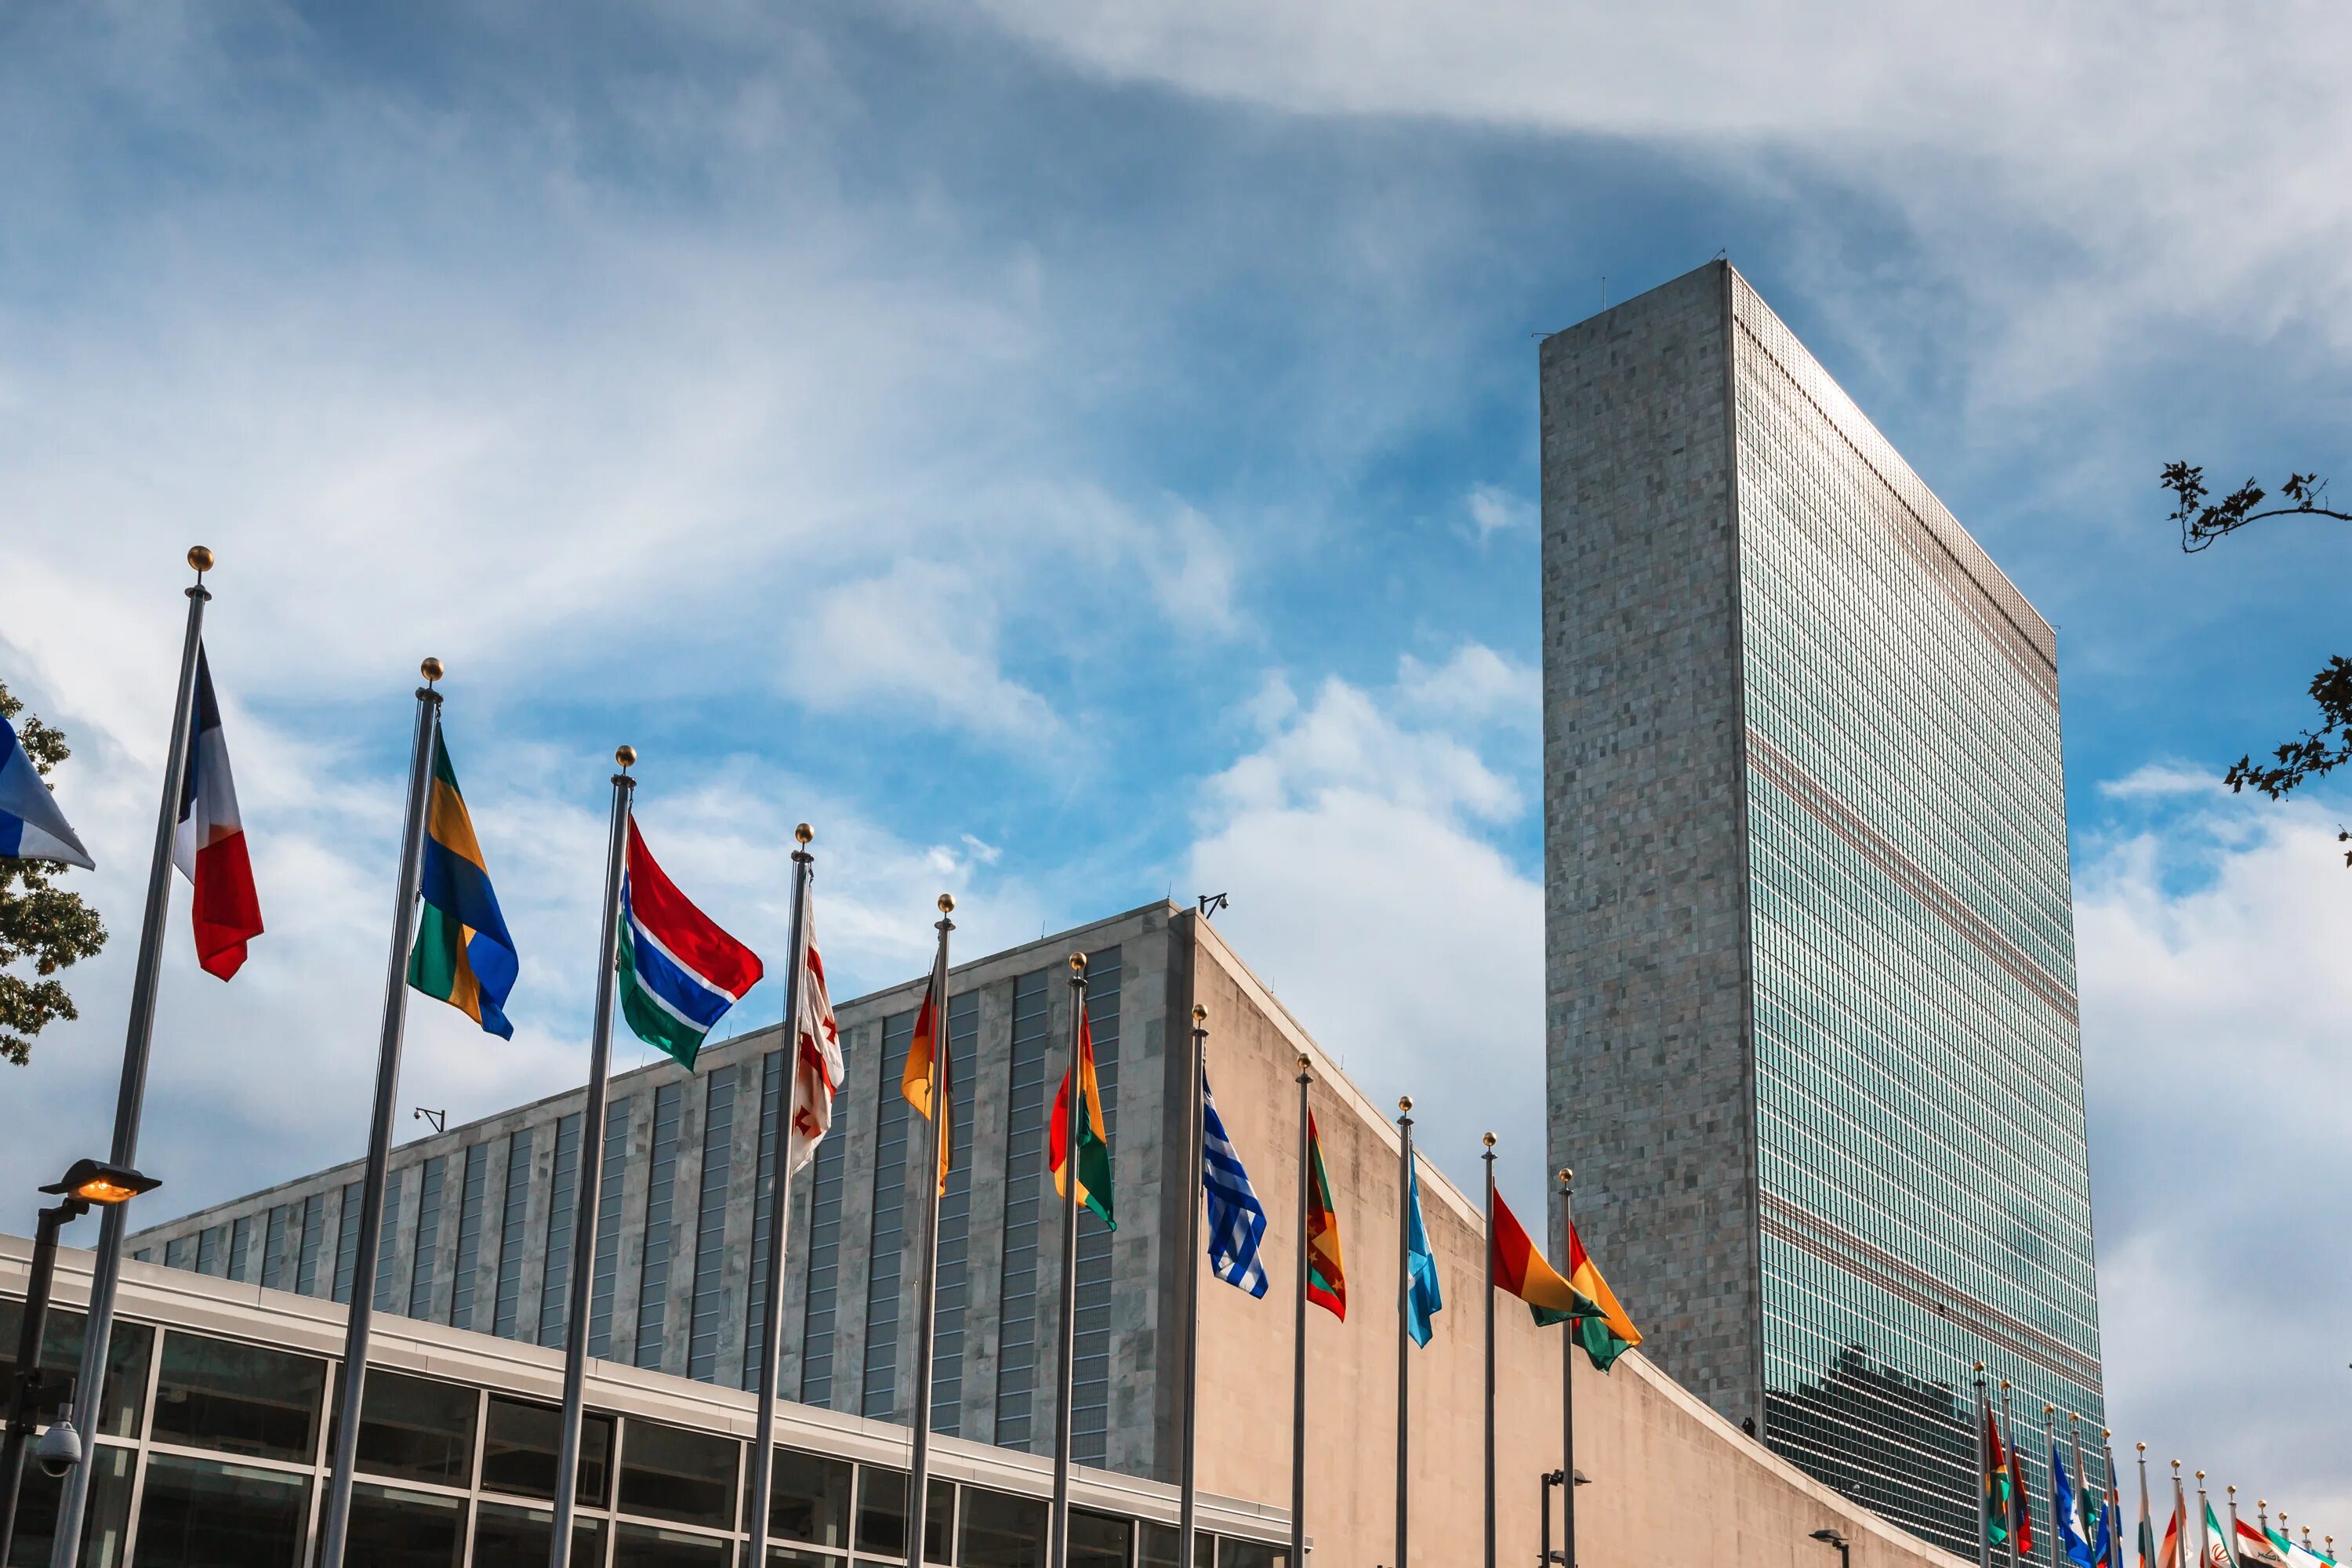 Штаб-квартира ООН В Нью-Йорке. Здание ООН В Нью-Йорке. Здание ООН В Нью-Йорке флаги. Здание ООН В Нью-Йорке фото. Организации оон в сша